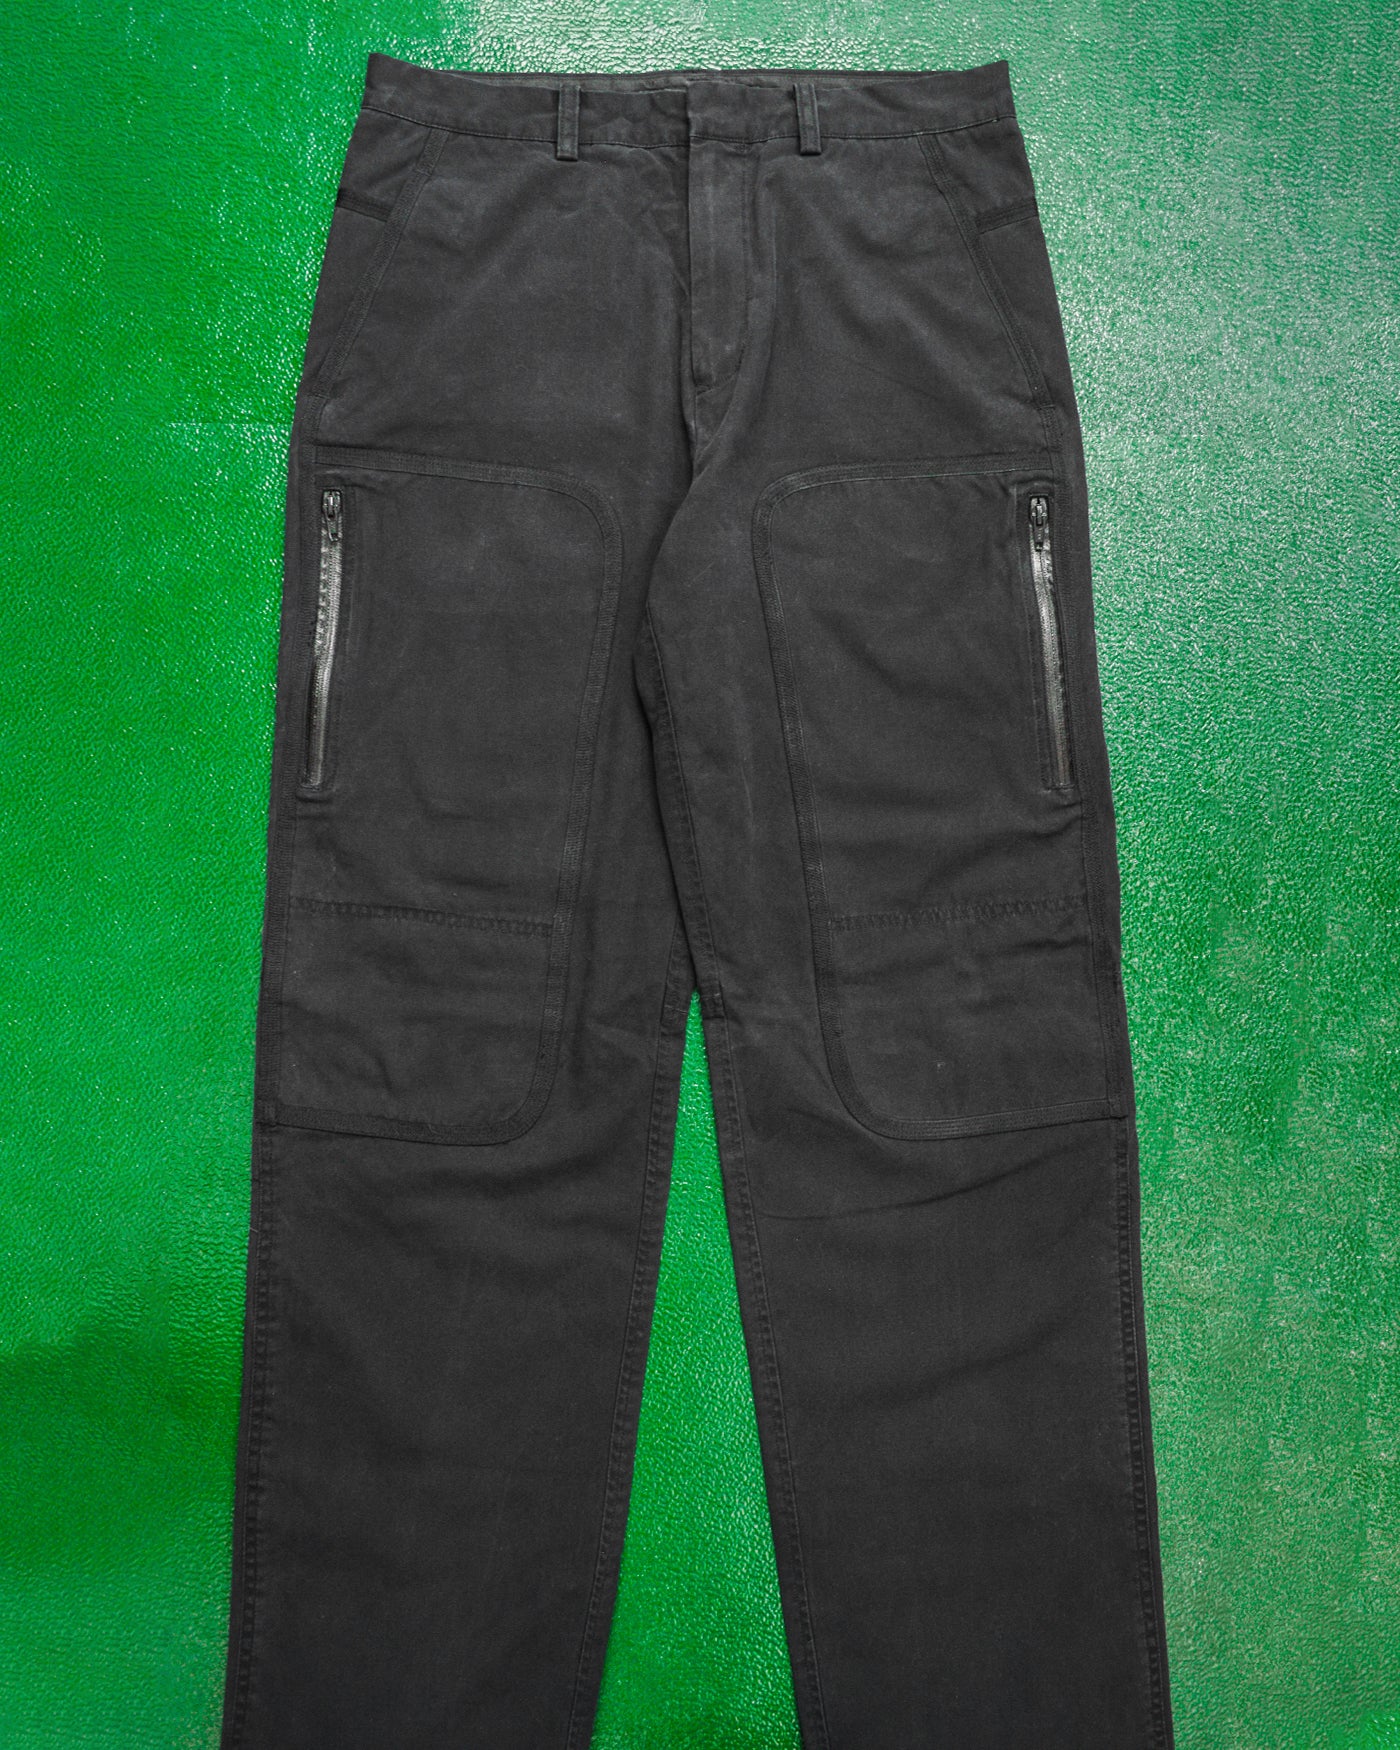 Laminated Zipper Cotton Cargo Pants (33)